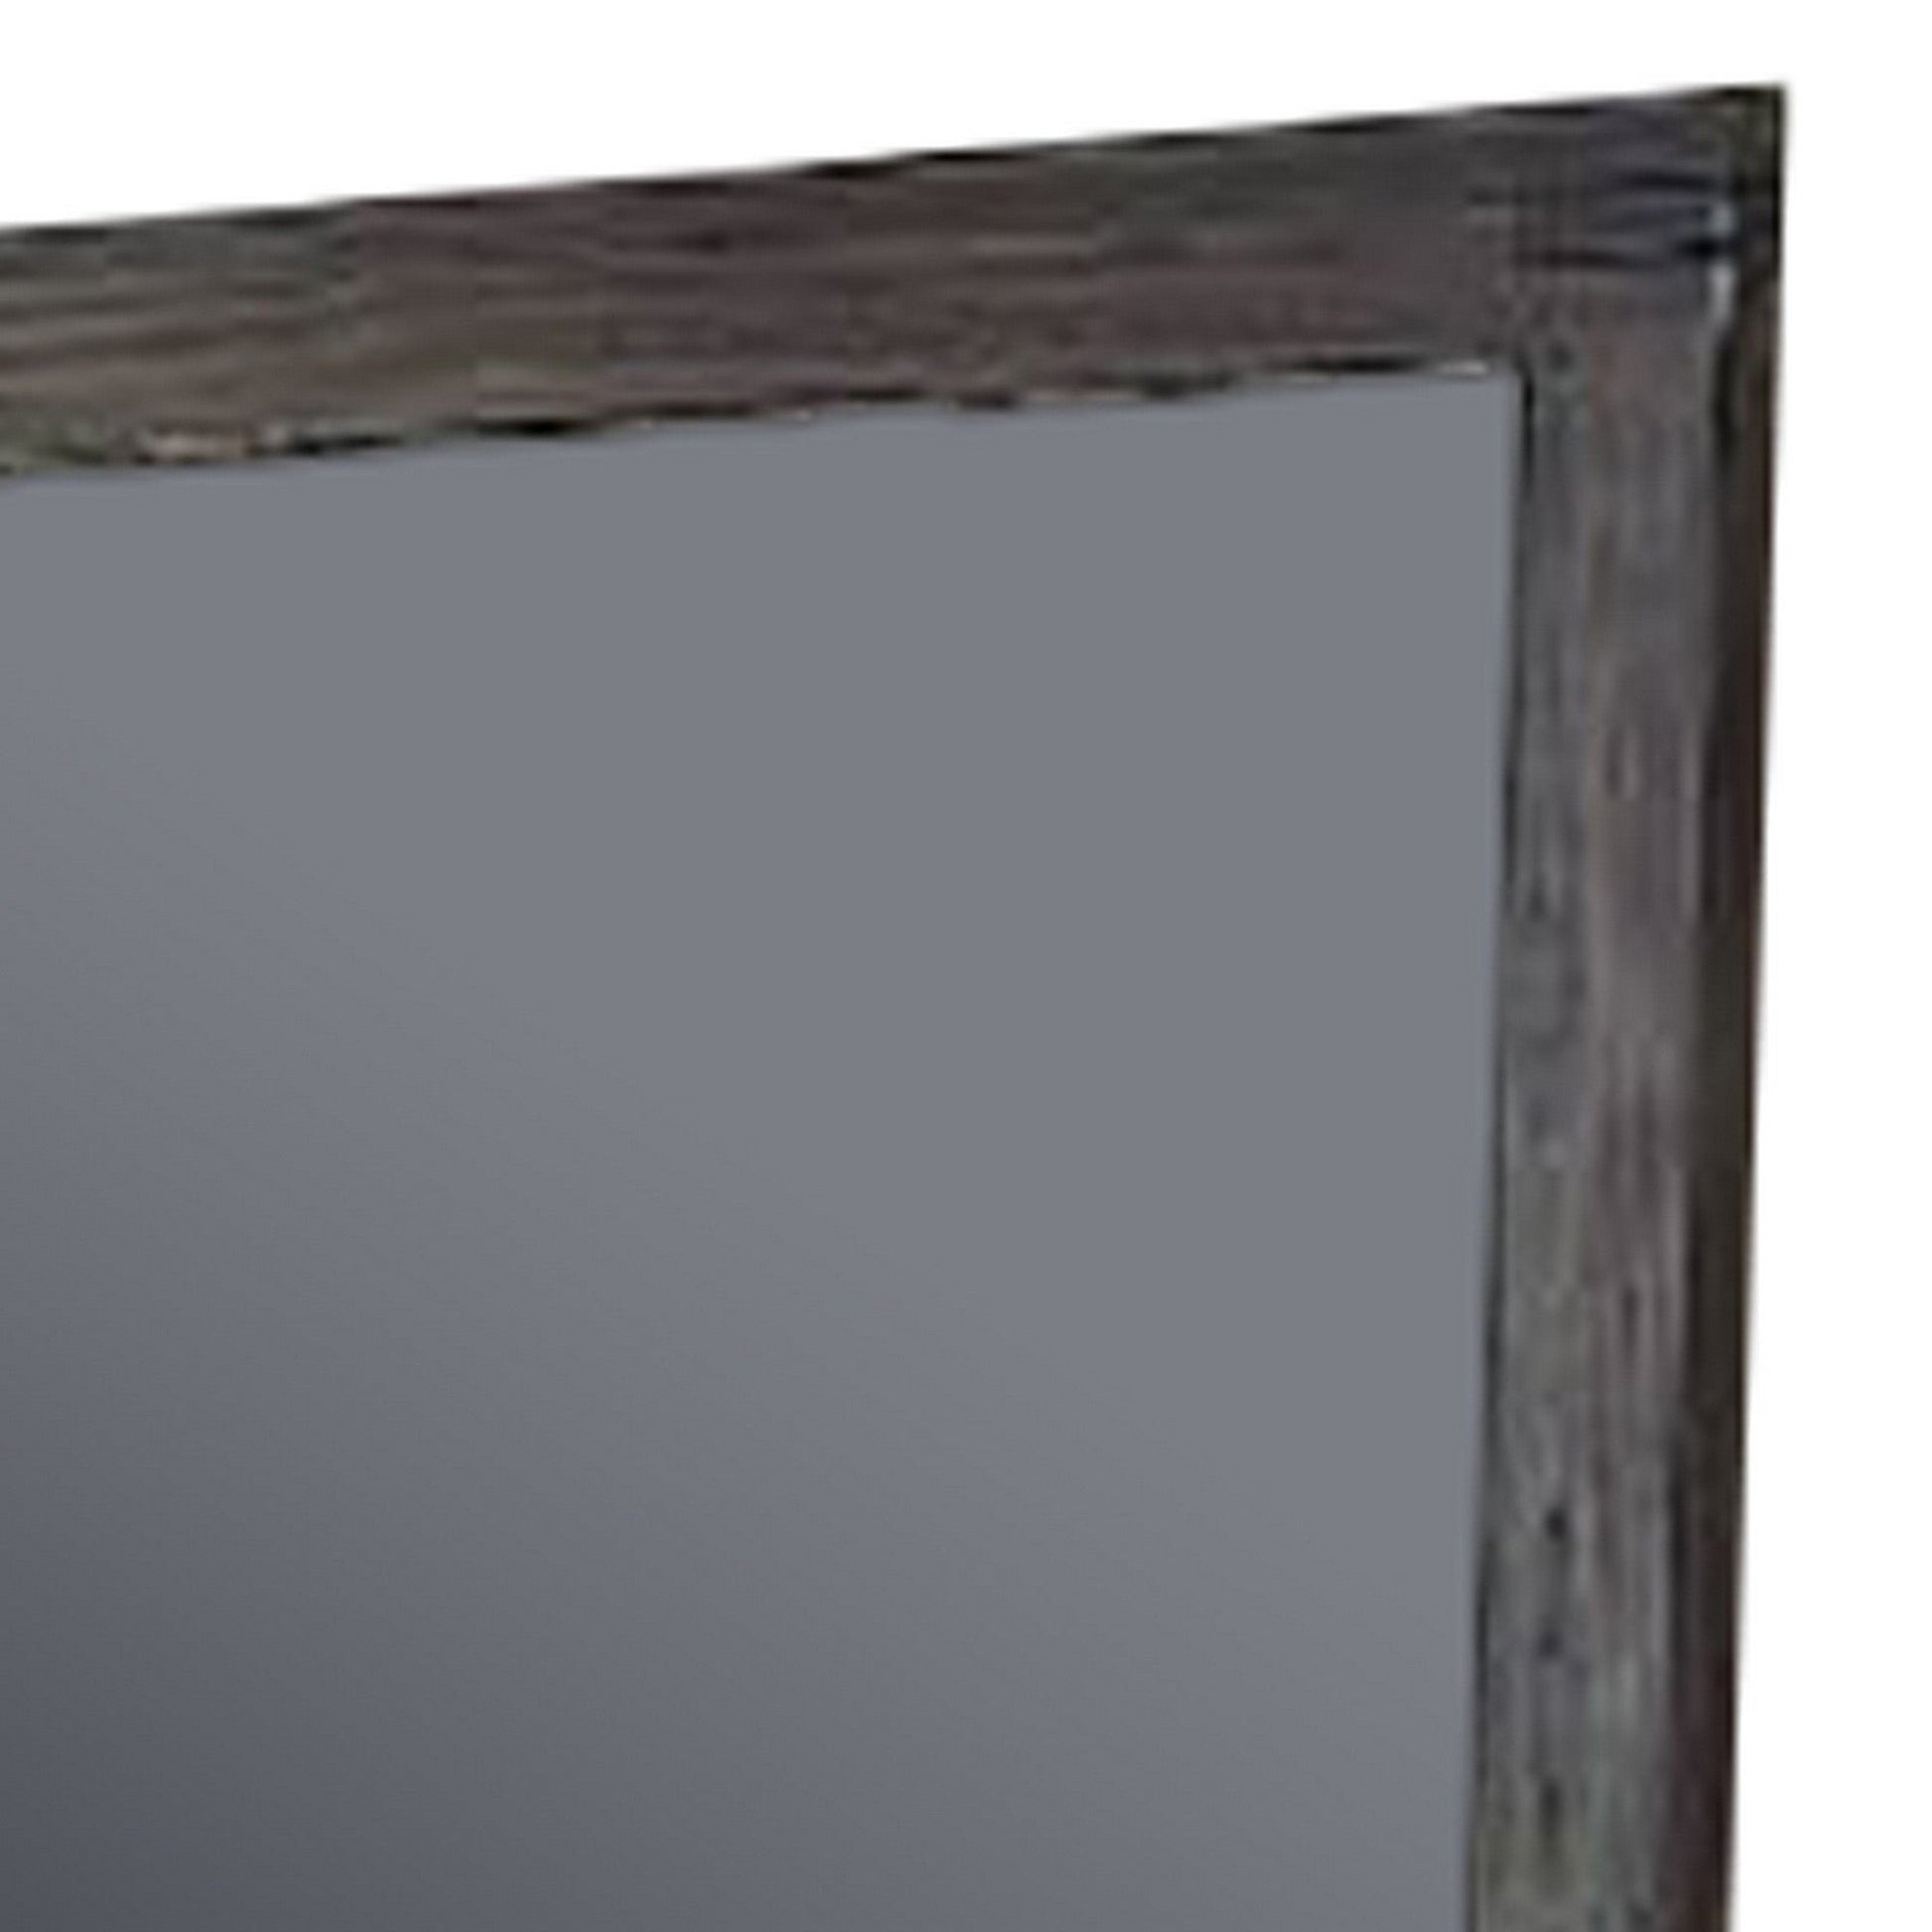 Benzara Dark Brown Wall Mirror With Rectangular Frame and Natural Wood Grain Details